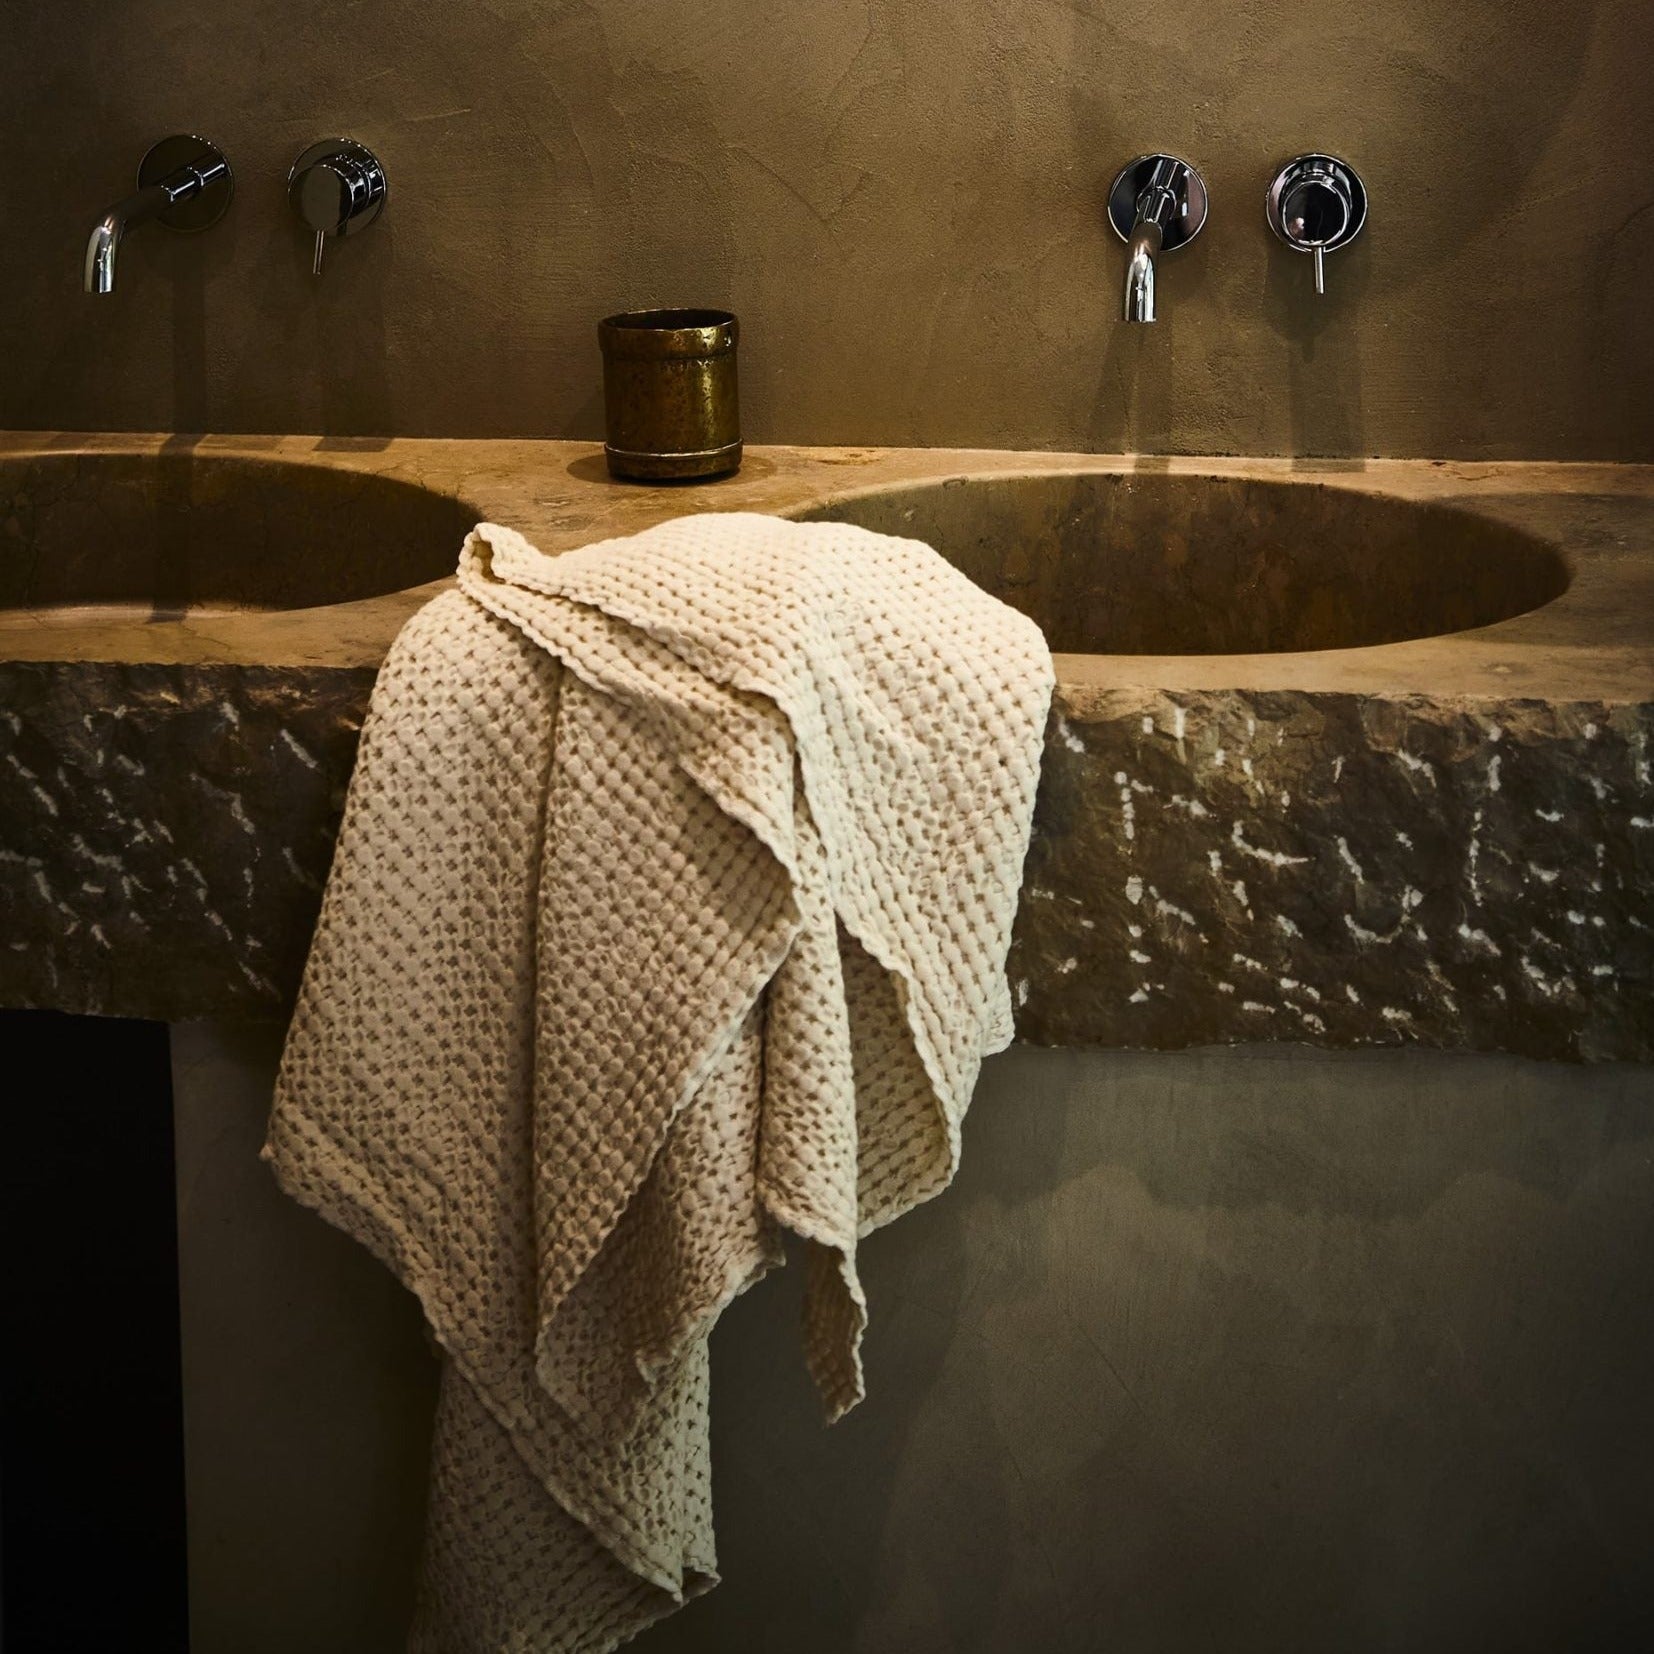 Cotton honeycomb bath sheet and towel